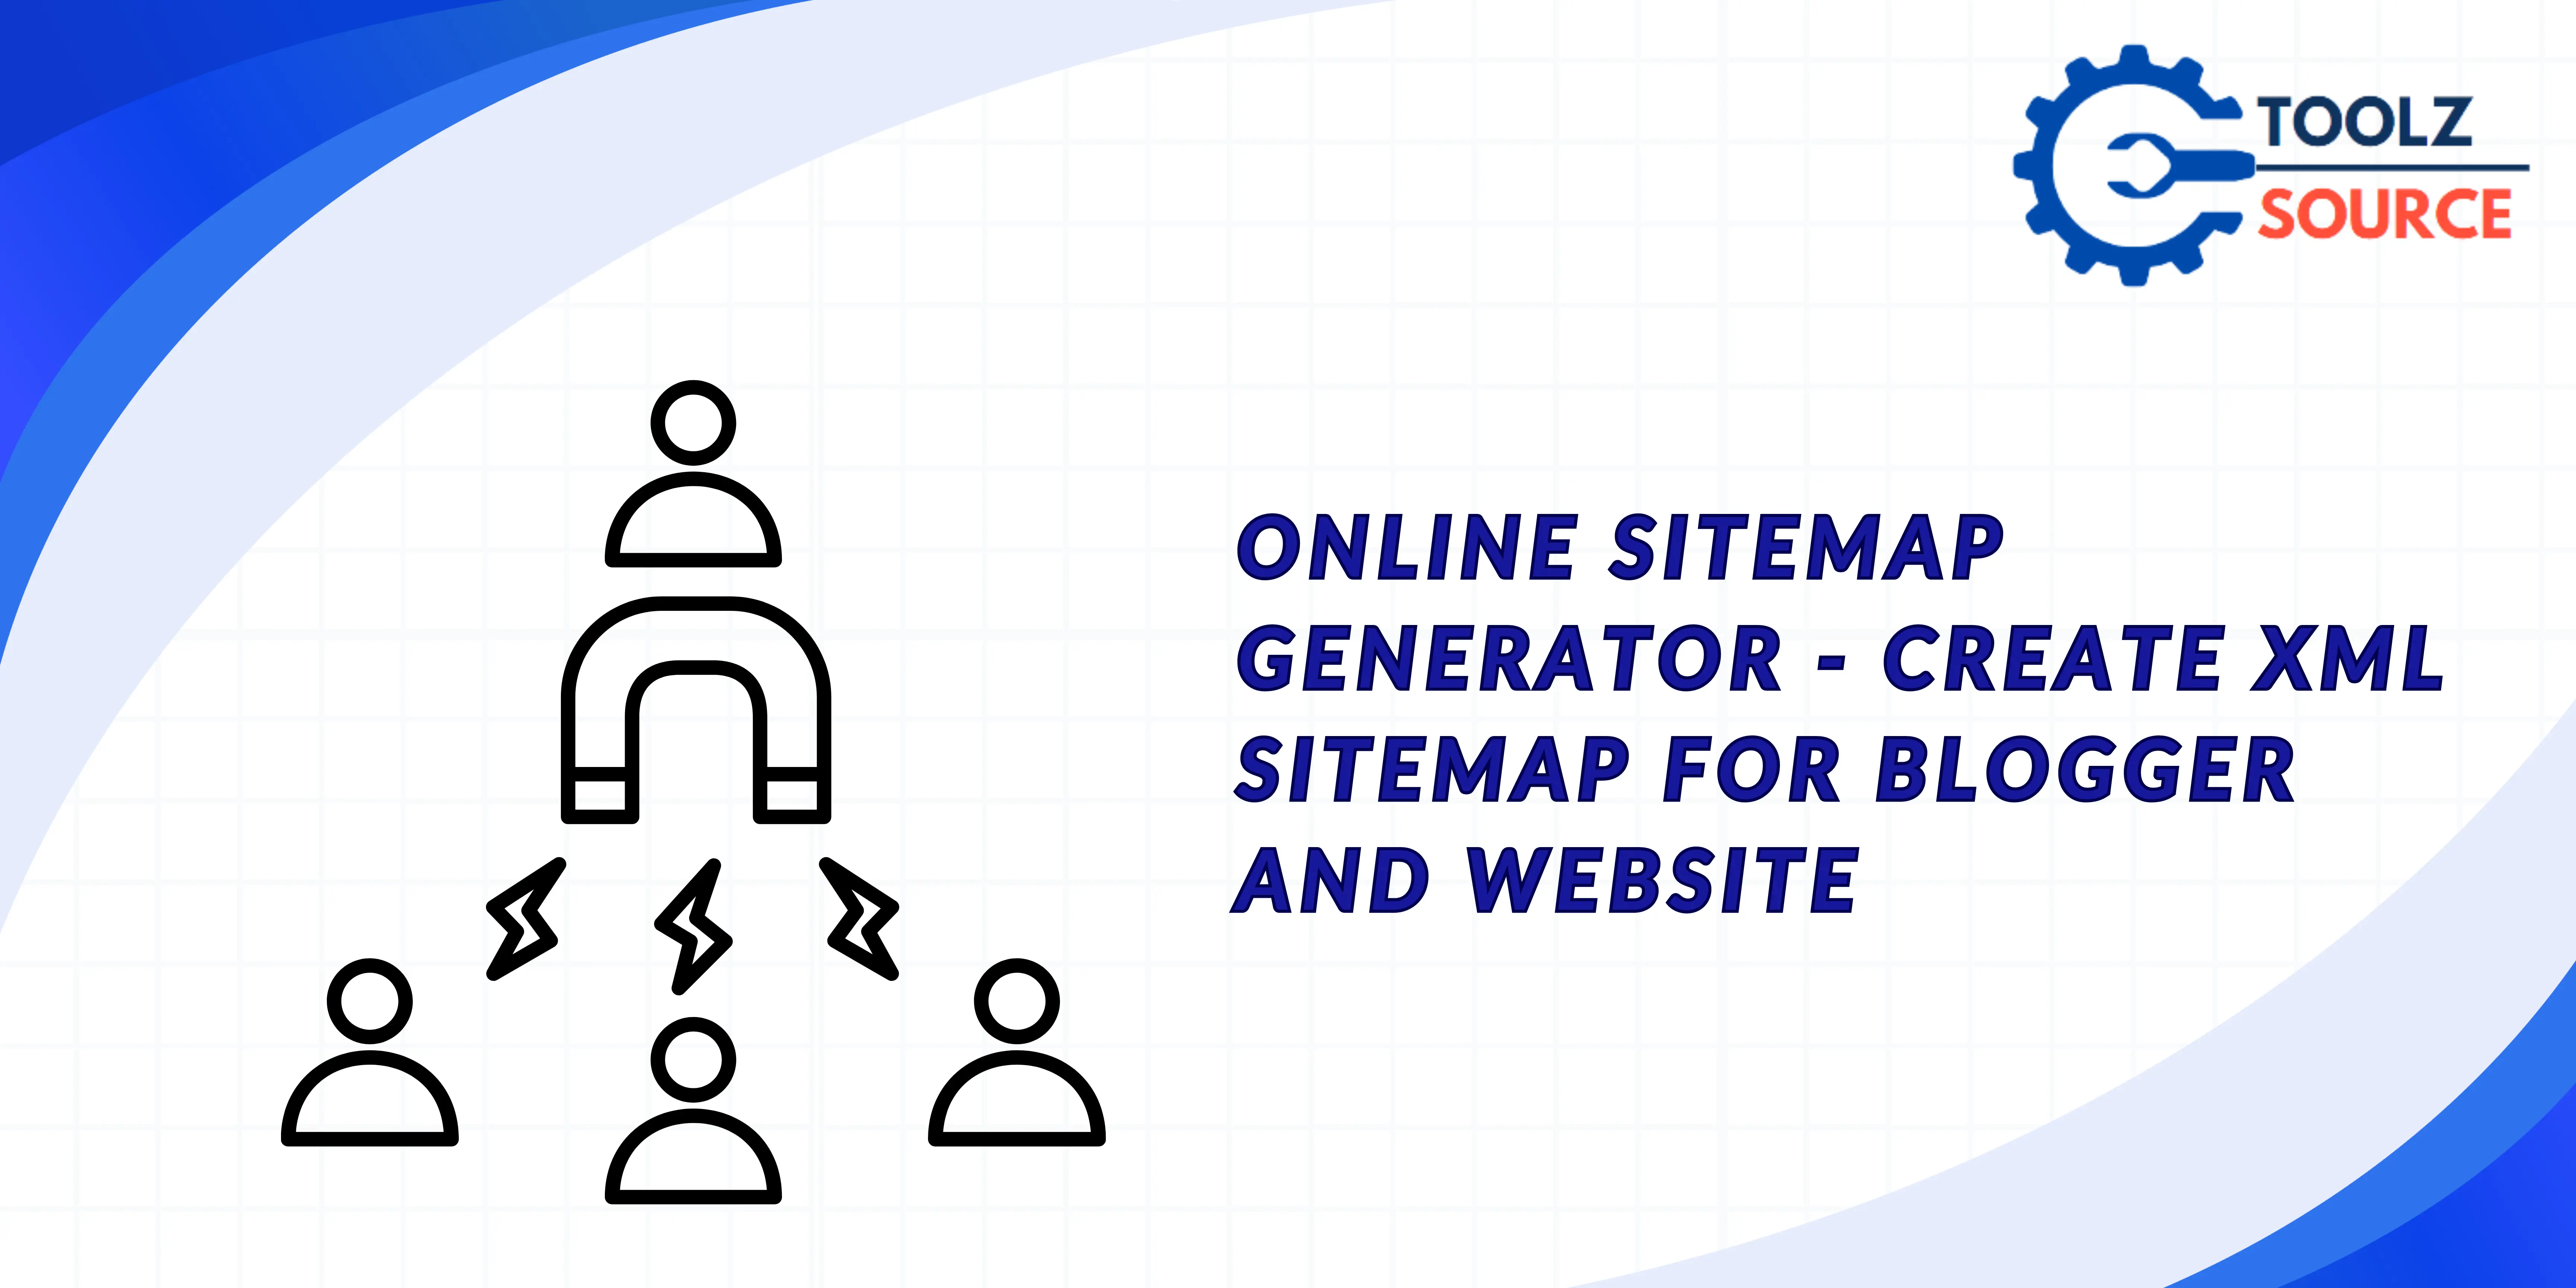 Online Sitemap Generator - Create XML Sitemap for Blogger and Website